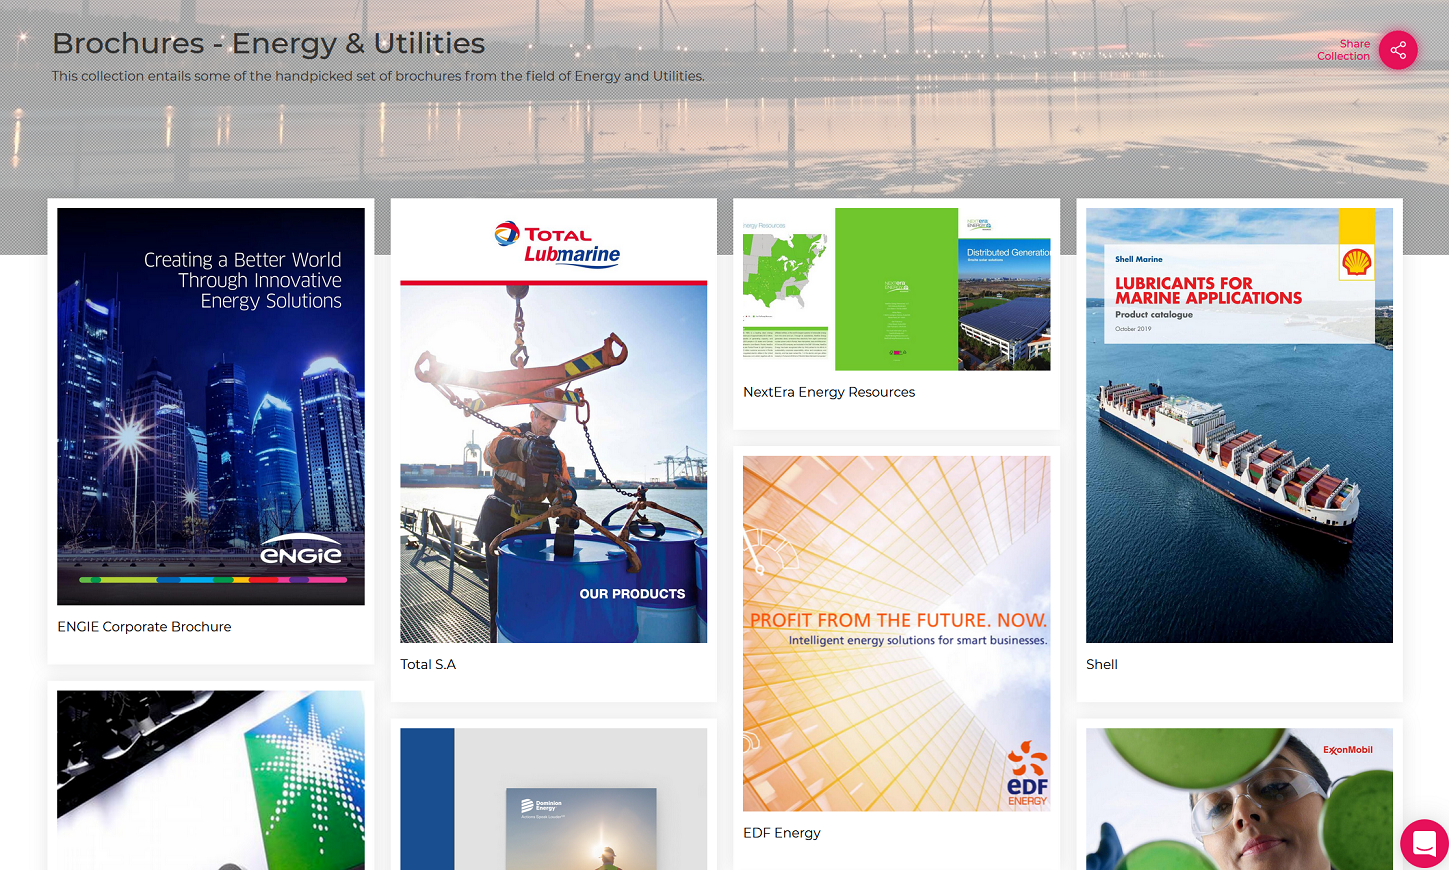 Brochure - Energy & Utilities - Cover Image